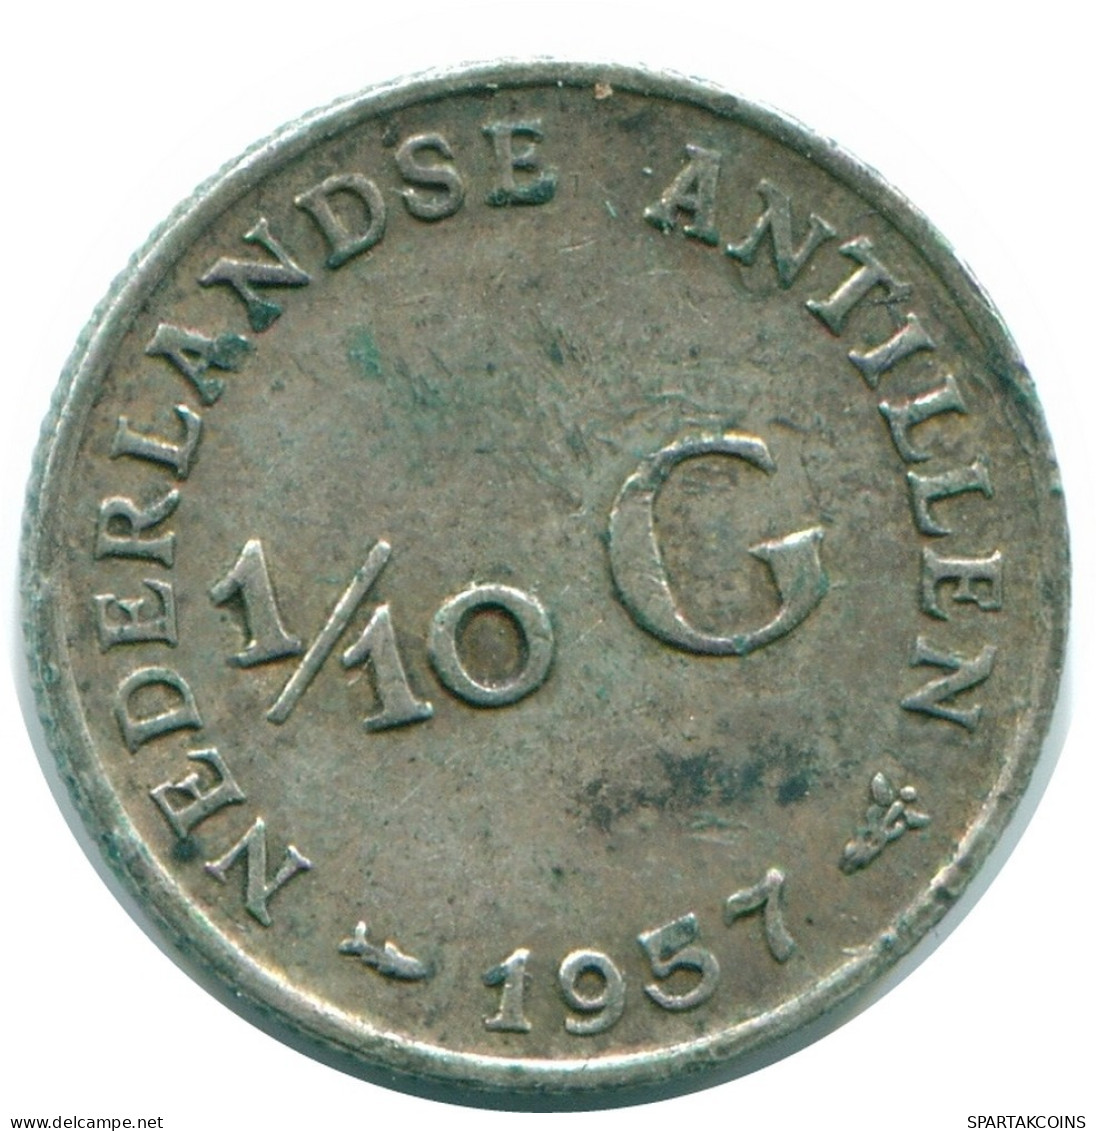 1/10 GULDEN 1957 NETHERLANDS ANTILLES SILVER Colonial Coin #NL12187.3.U.A - Niederländische Antillen